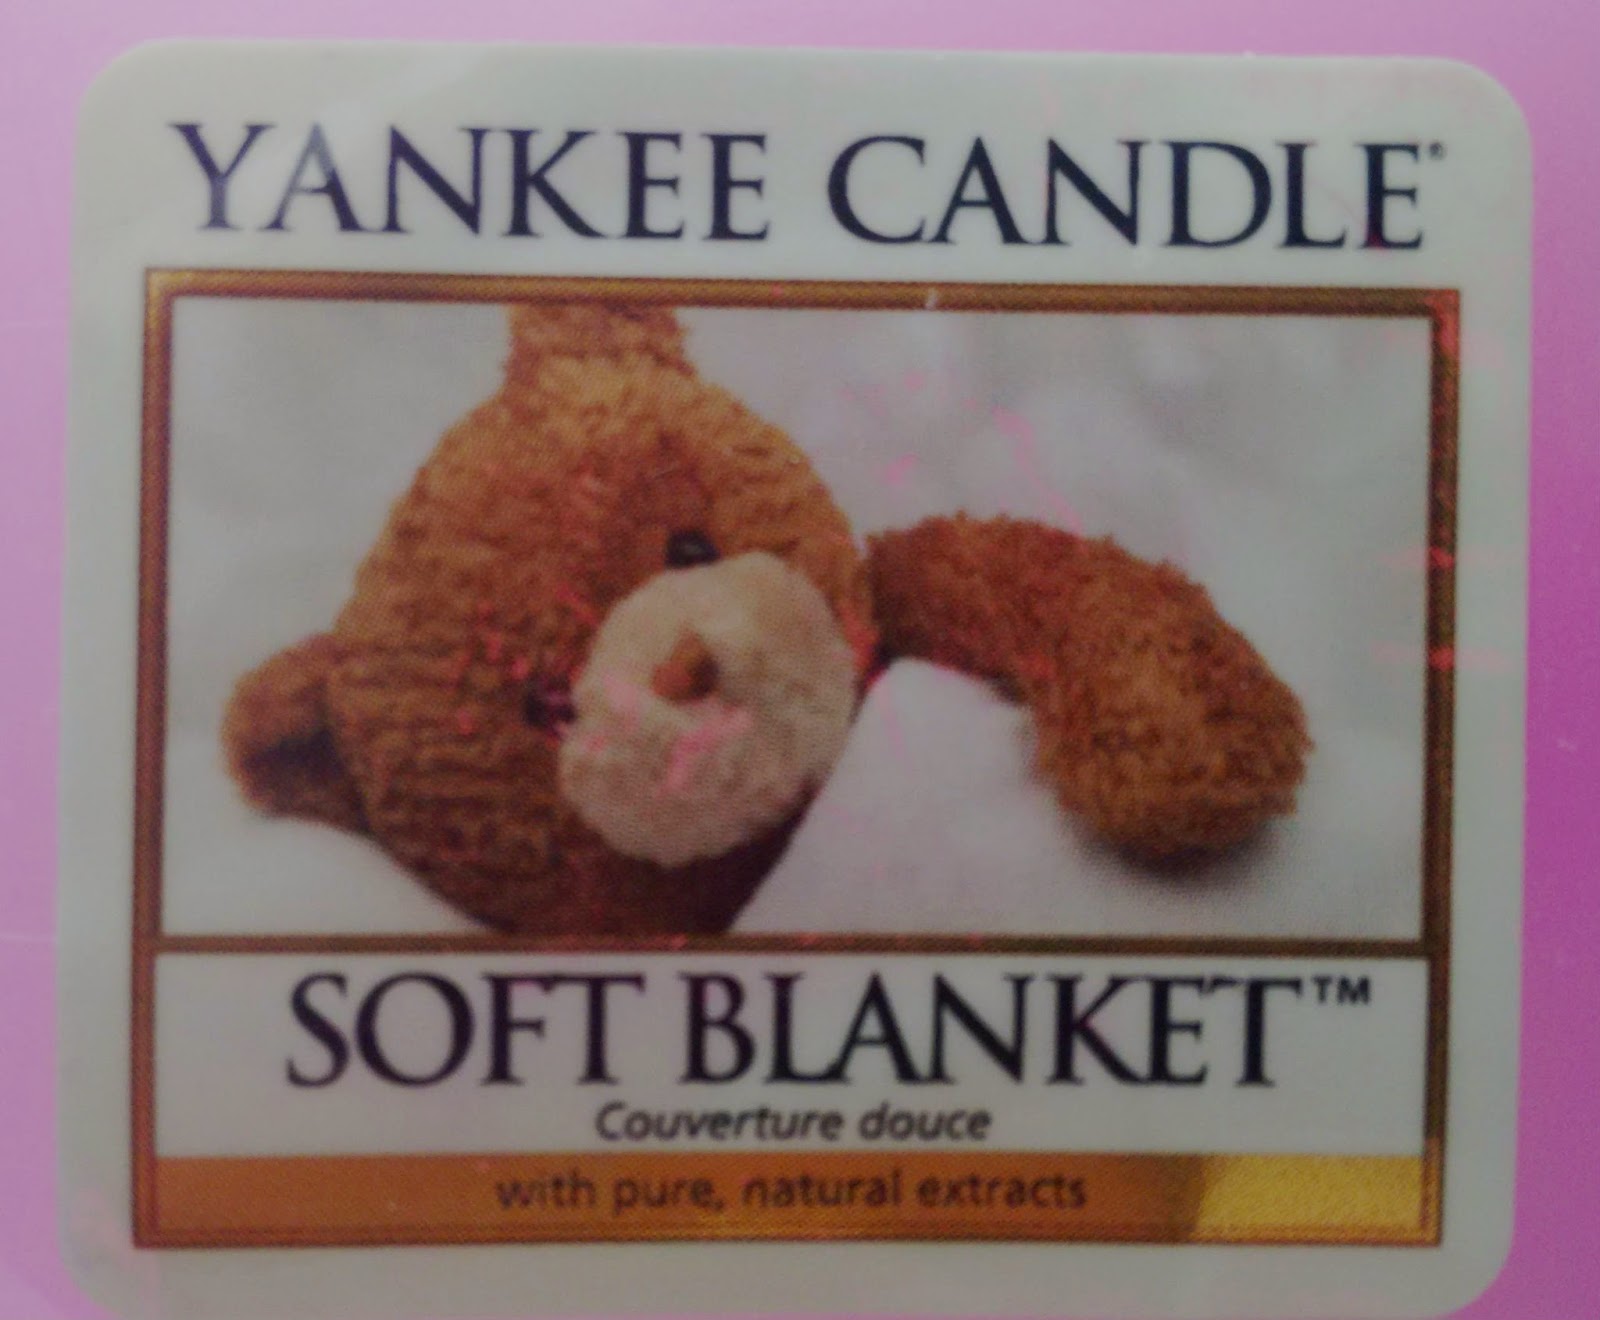 soft blanket tart yankee candle